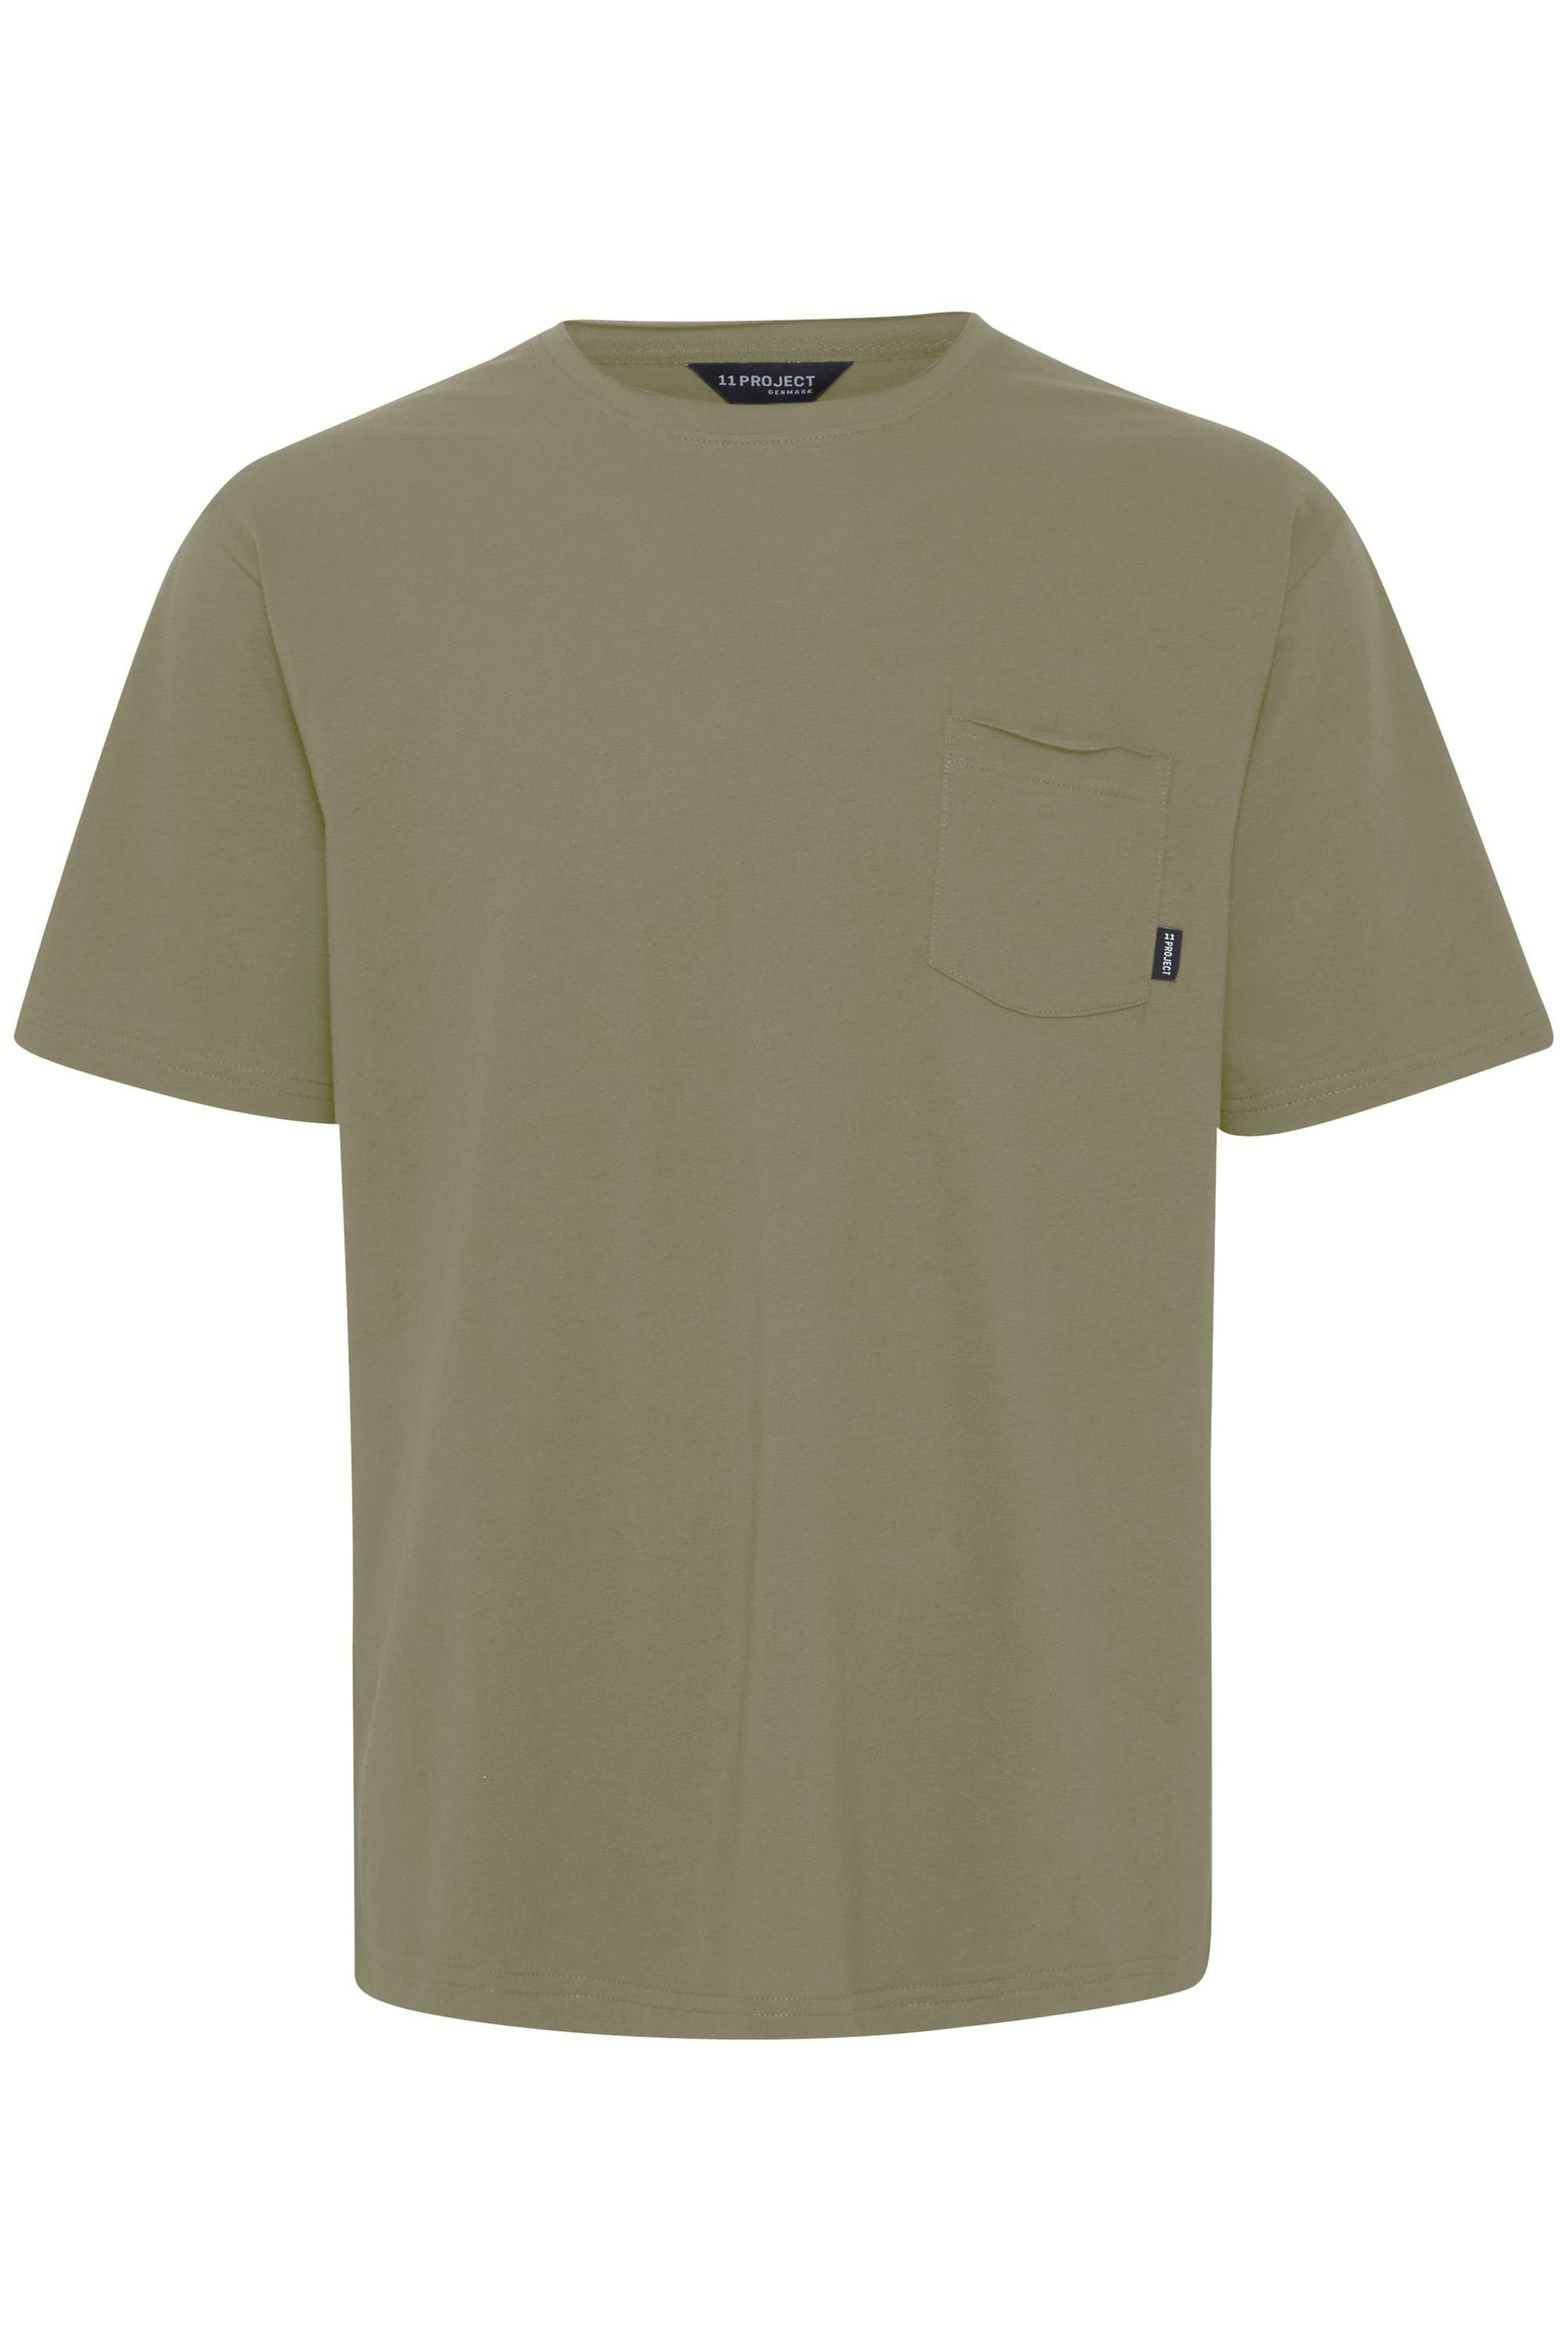 11 Project T-Shirt 11 Project Lichen Green T-Shirt O-Neck PREliah 21300997ME Deep